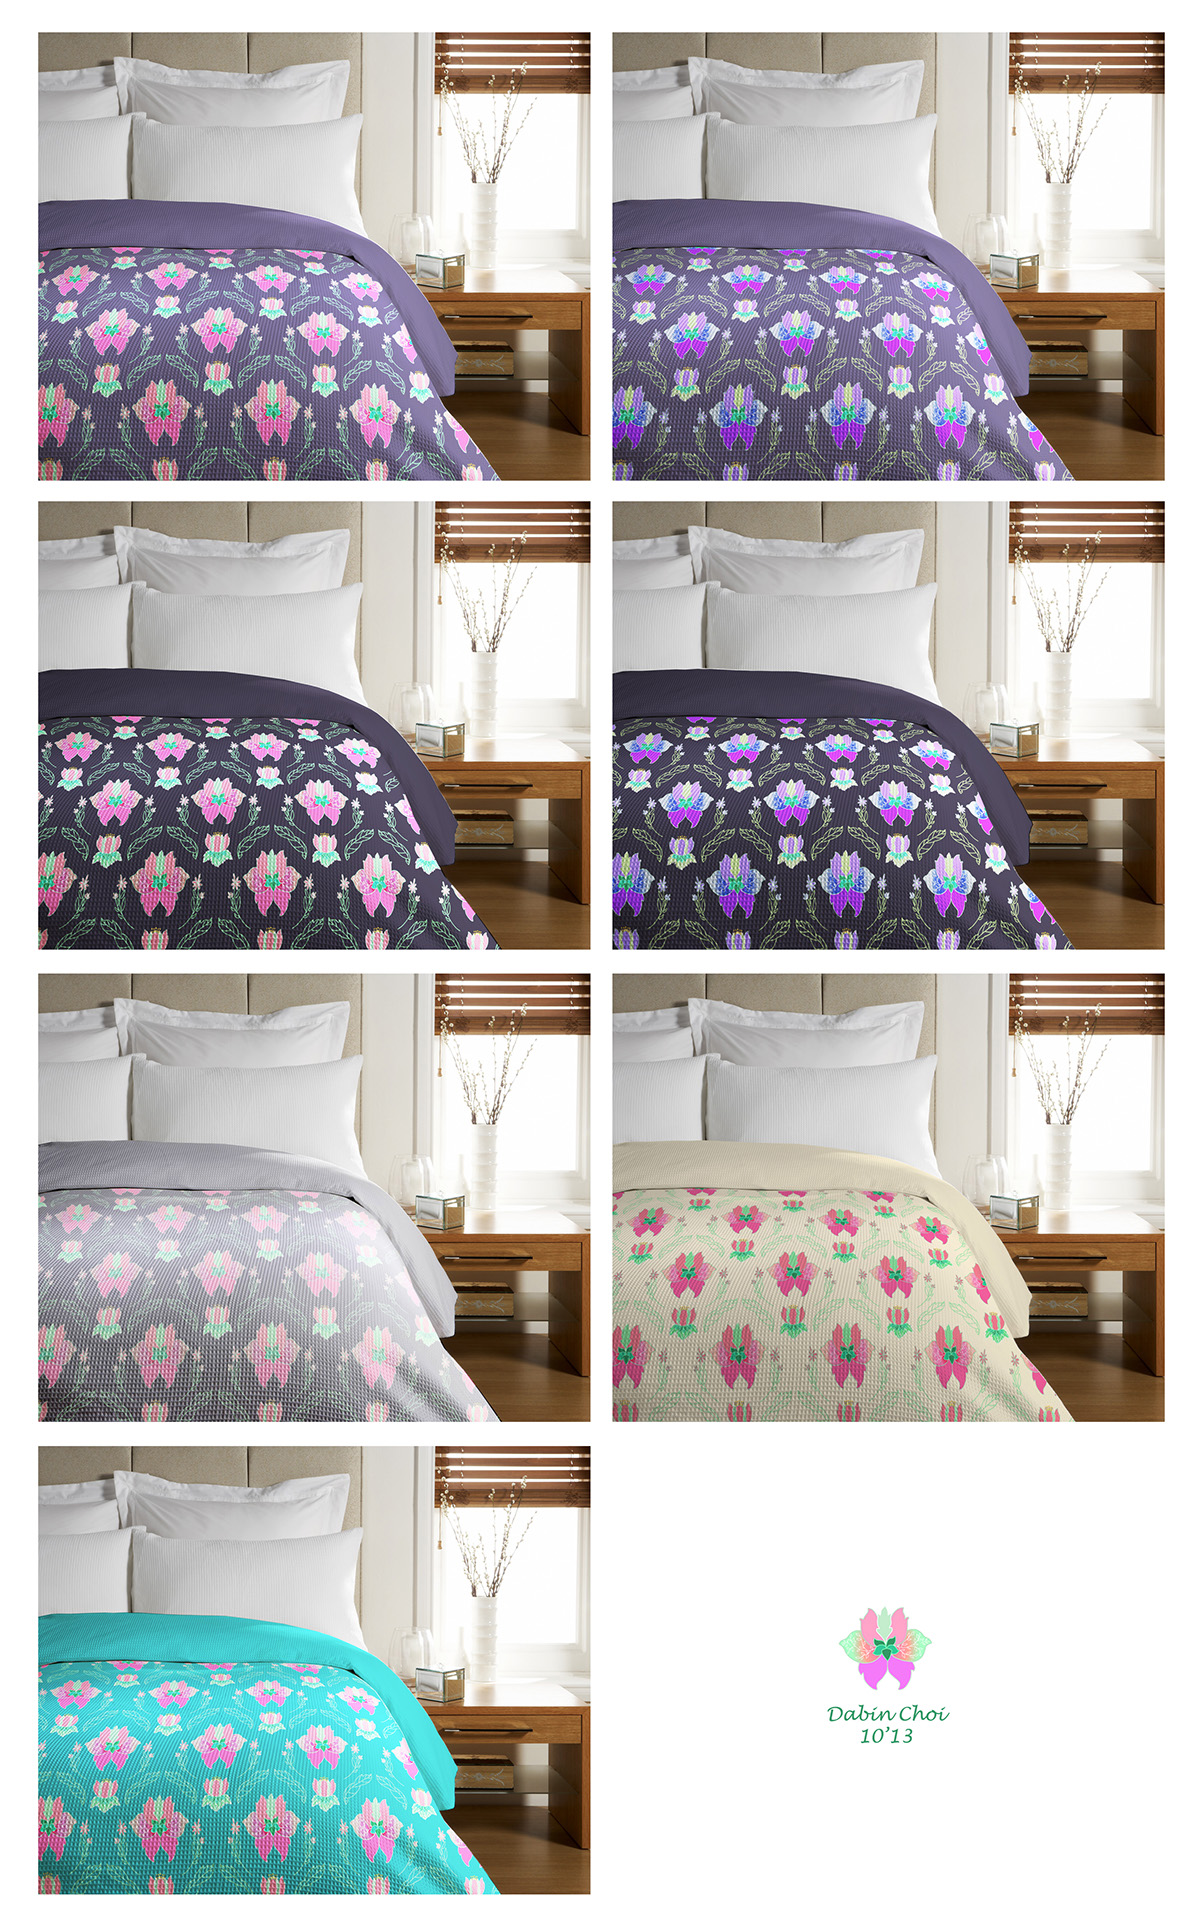 surface design floral patterns apparel home decor